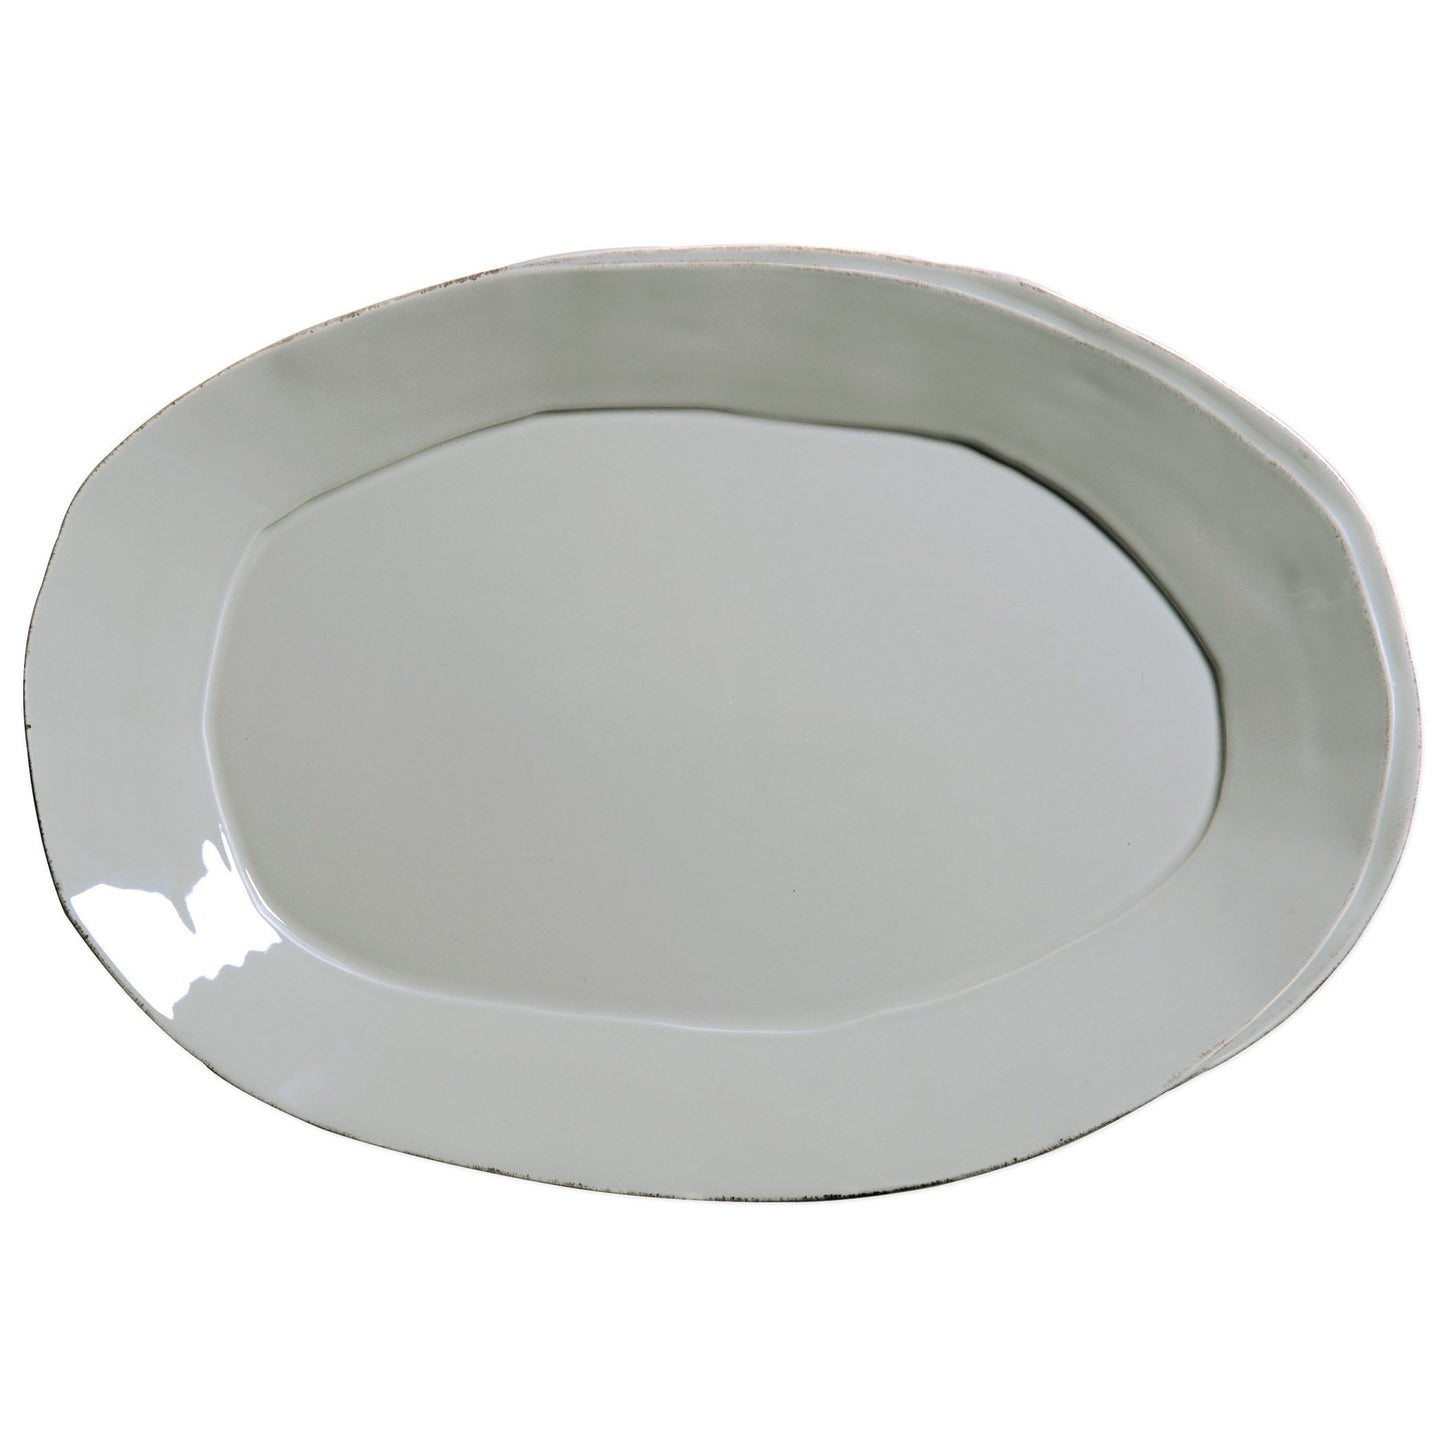 grey oval platter on white background.